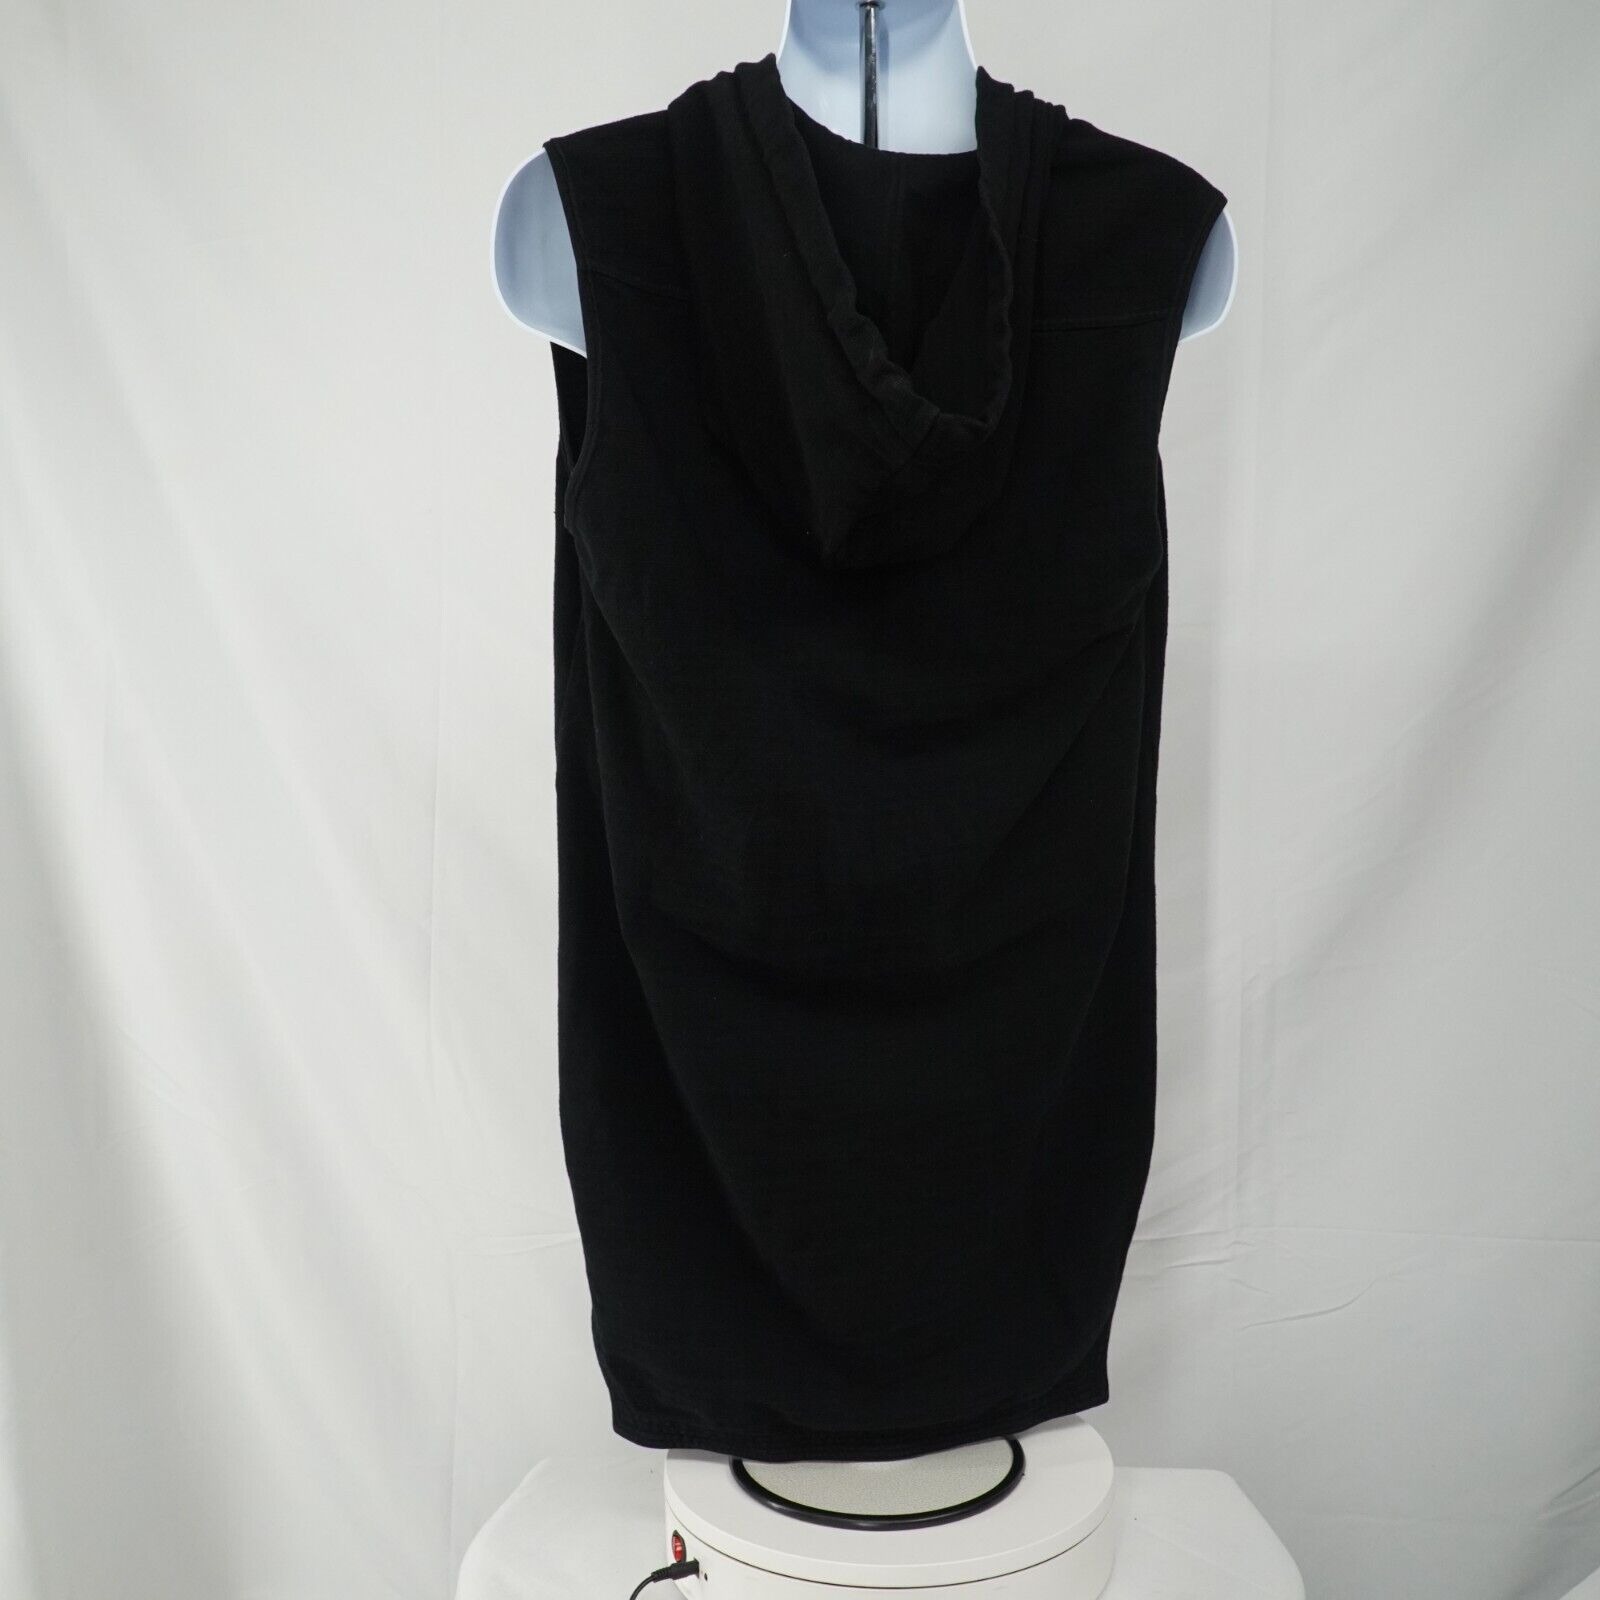 Black Zip Up Sleeveless Jacket Hoodie Cotton - Medium - 14